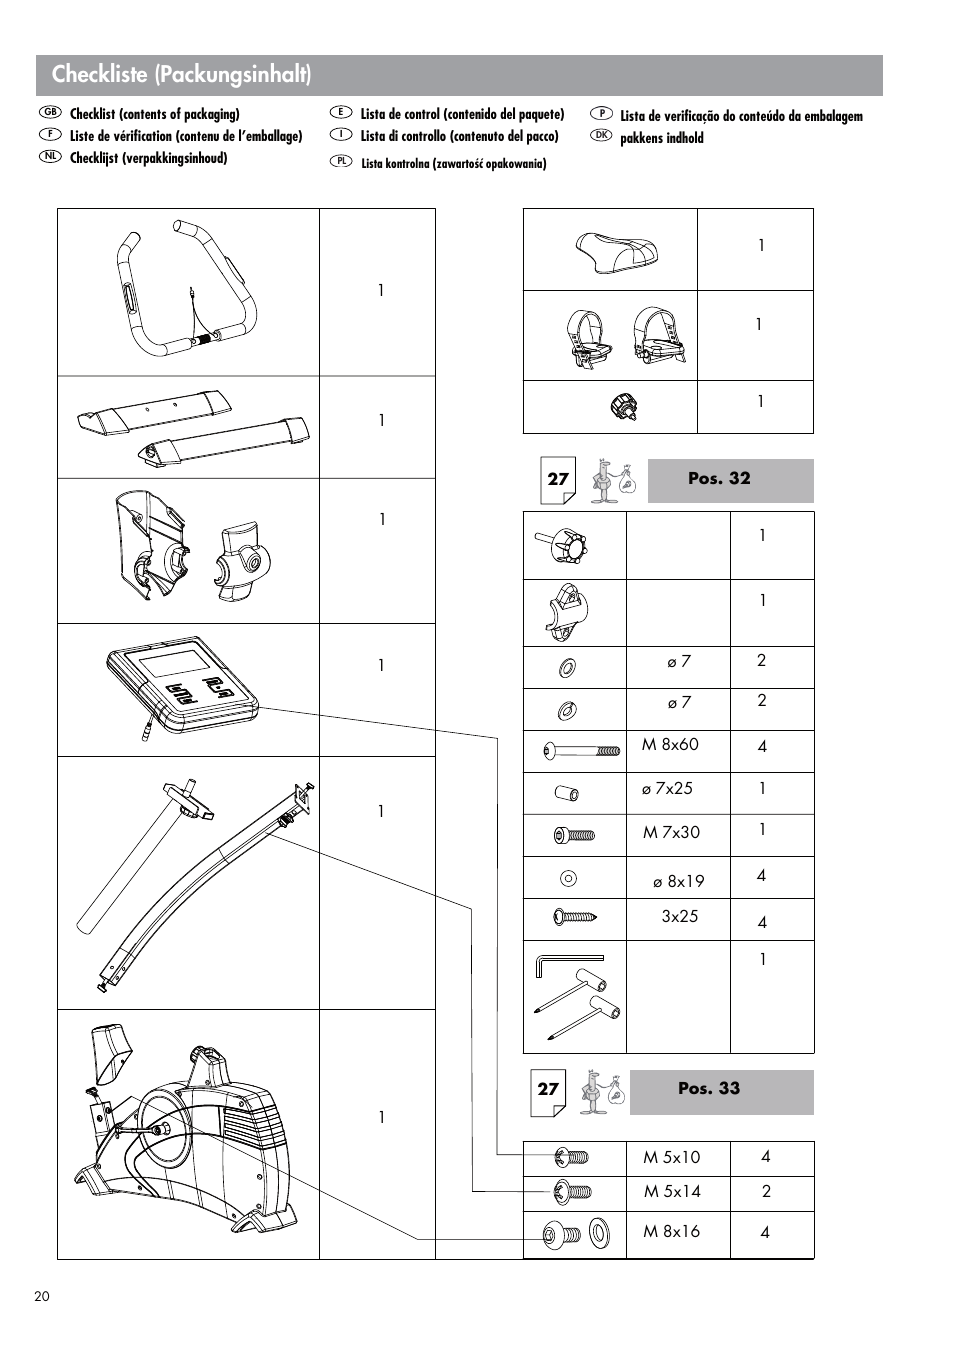 Checkliste (packungsinhalt) | Kettler PASO 309 User Manual | Page 4 / 12